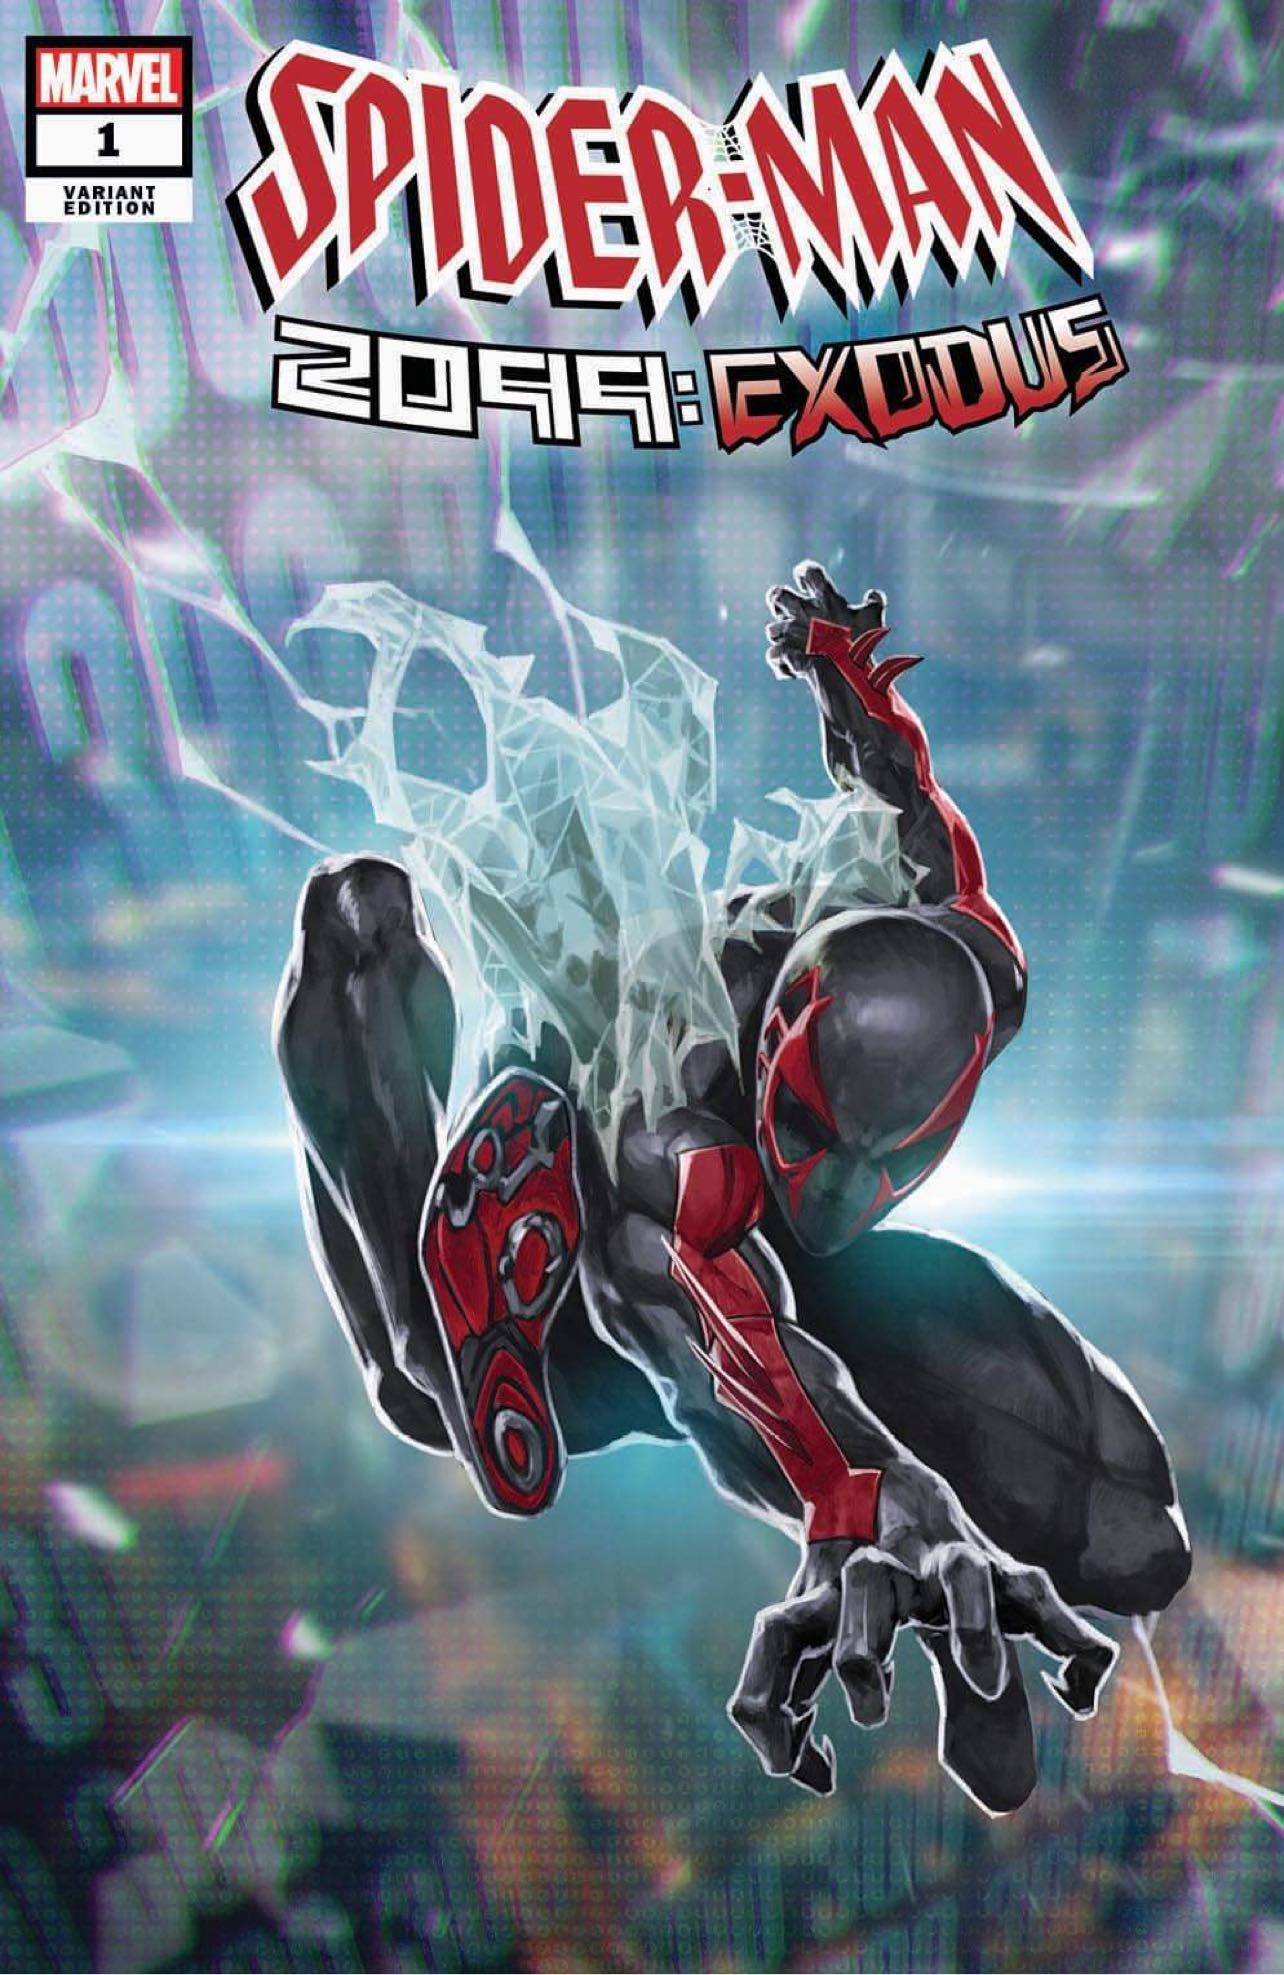 05/25/2022 SPIDER-MAN 2099: EXODUS #1 SKAN SRISUWAN EXCLUSIVE HOMAGE VARIANT OPTIONS